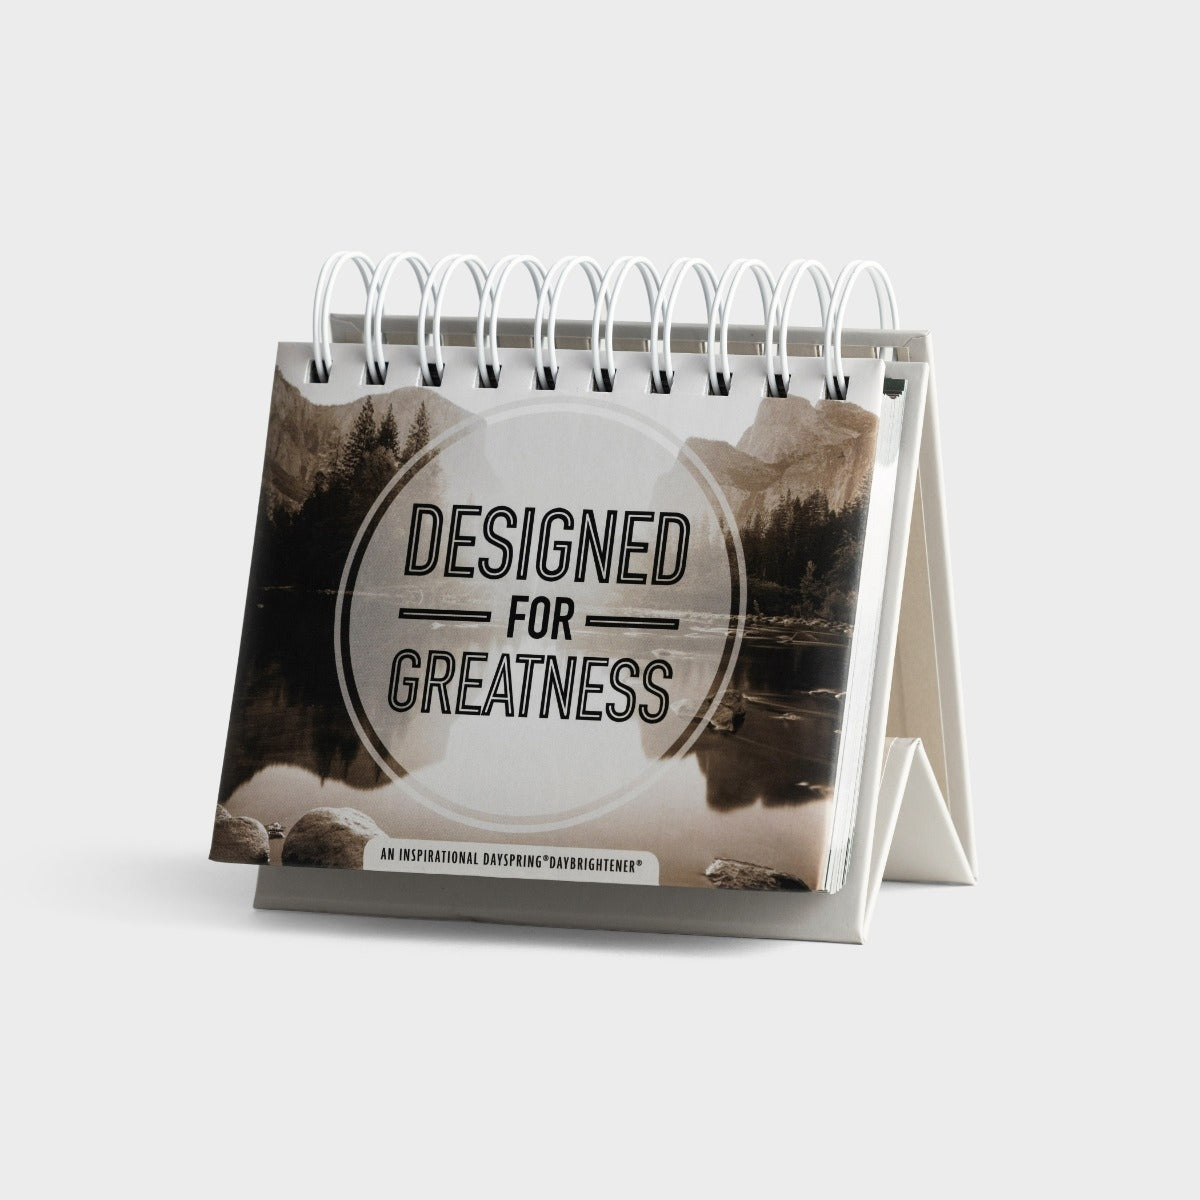 Designed for Greatness: An Inspirational DaySpring DayBrightener